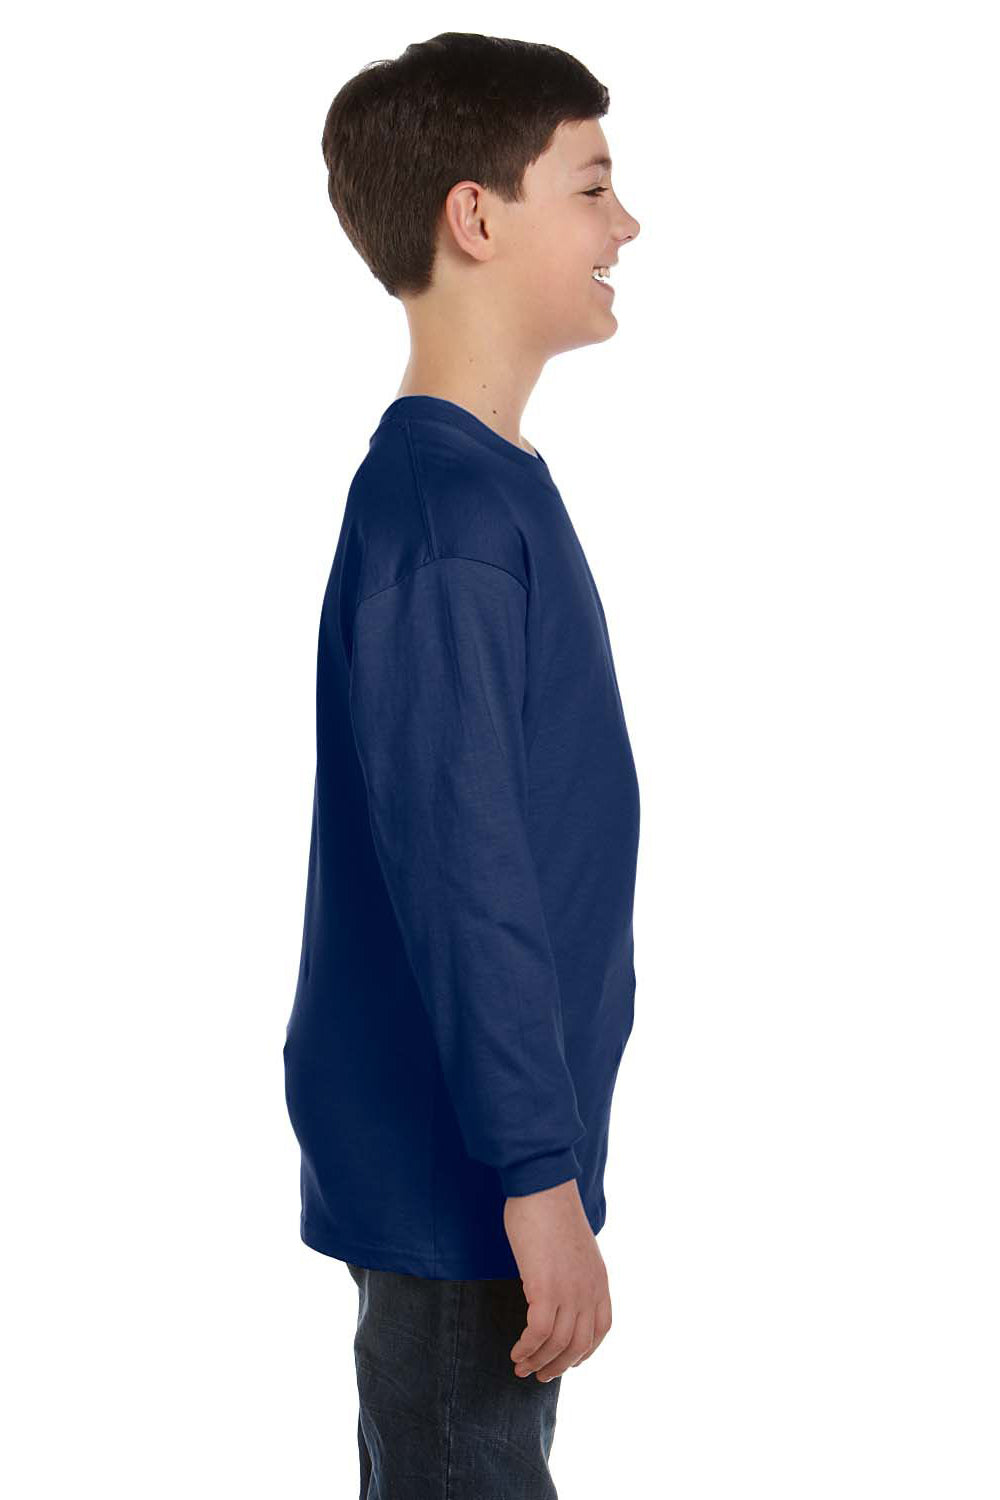 Gildan G540B Youth Long Sleeve Crewneck T-Shirt Navy Blue Side